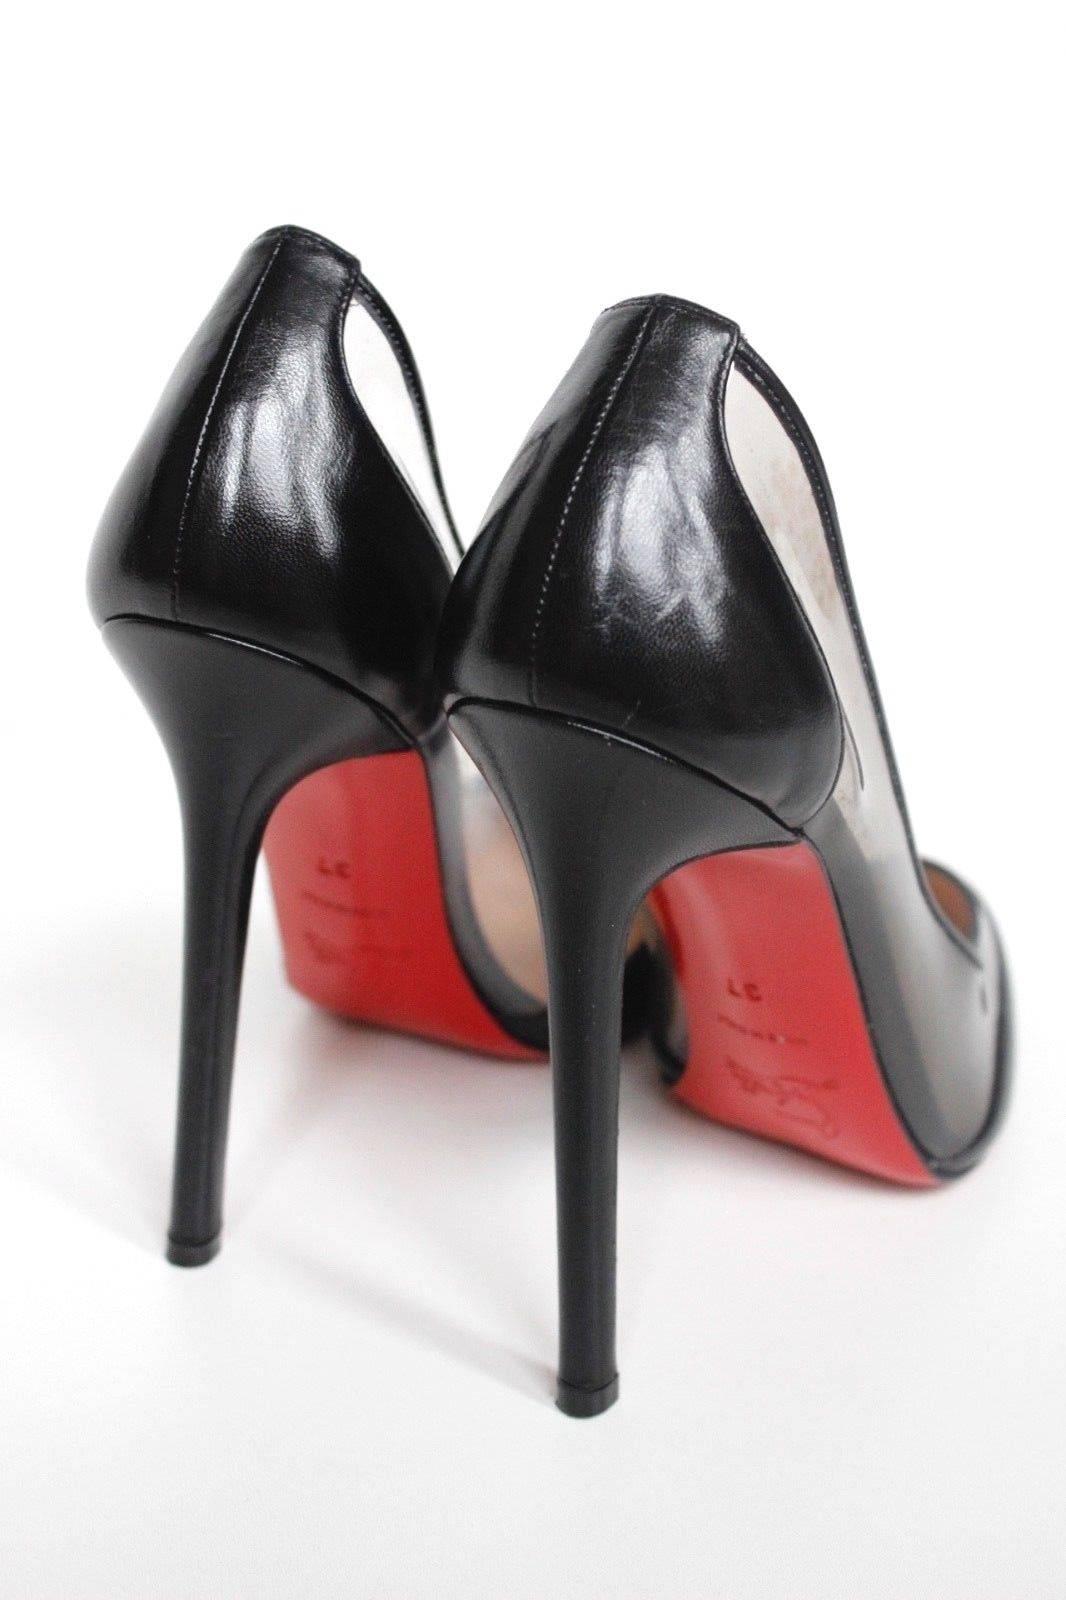 Women's Christian Louboutin Black Pumps Heels 37 uk 4 